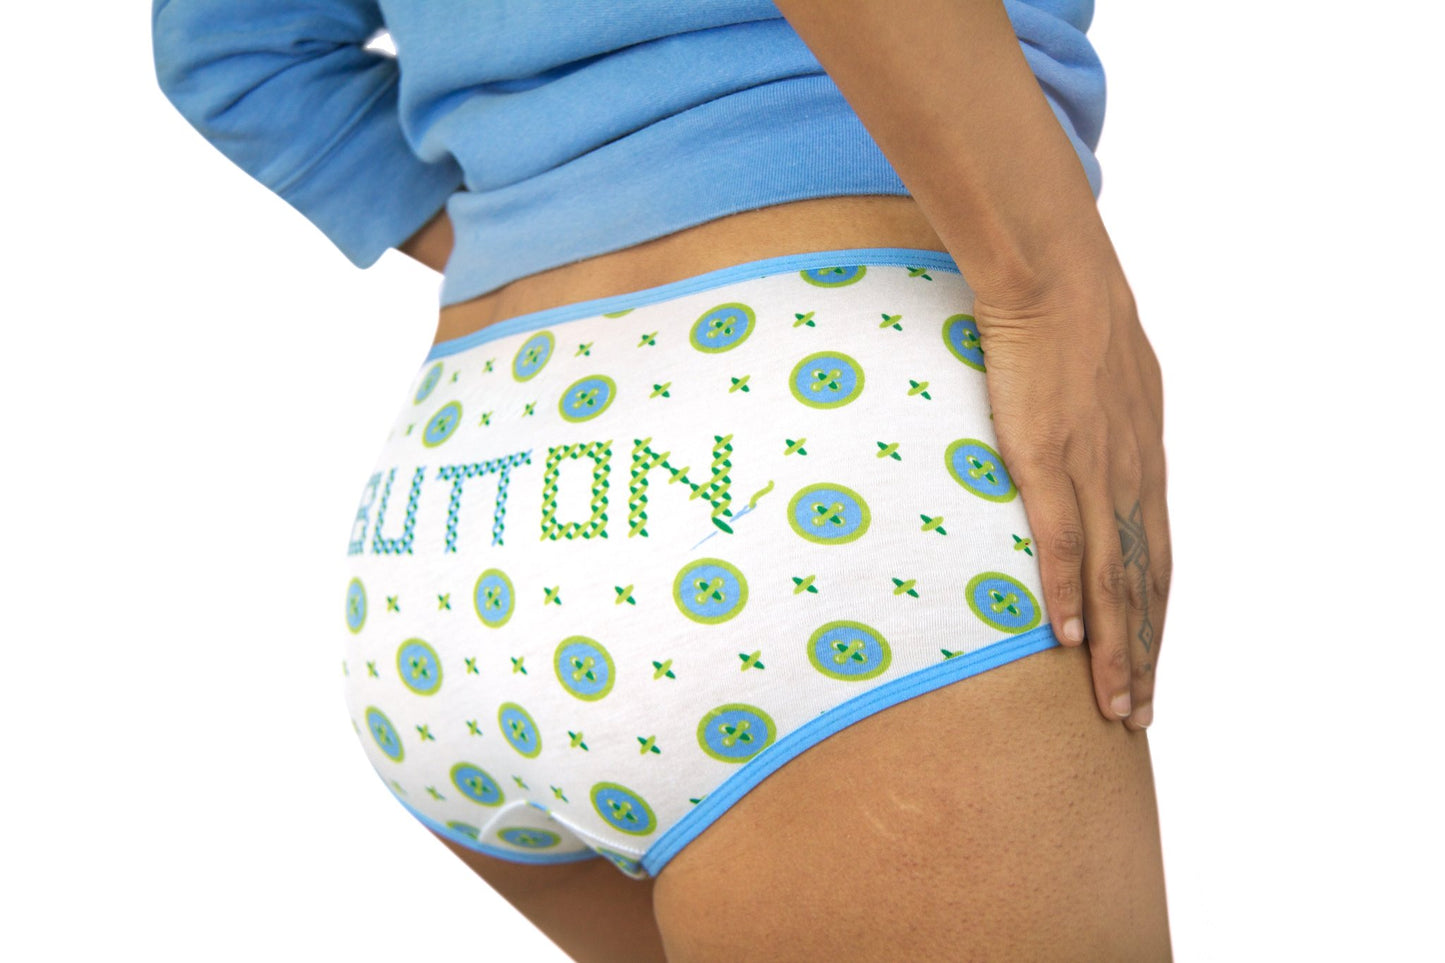 Underworld.Co Organic Cotton Panties - BUTTON Boyshorts, Cotton, featured, organic, Panties - bare essentials